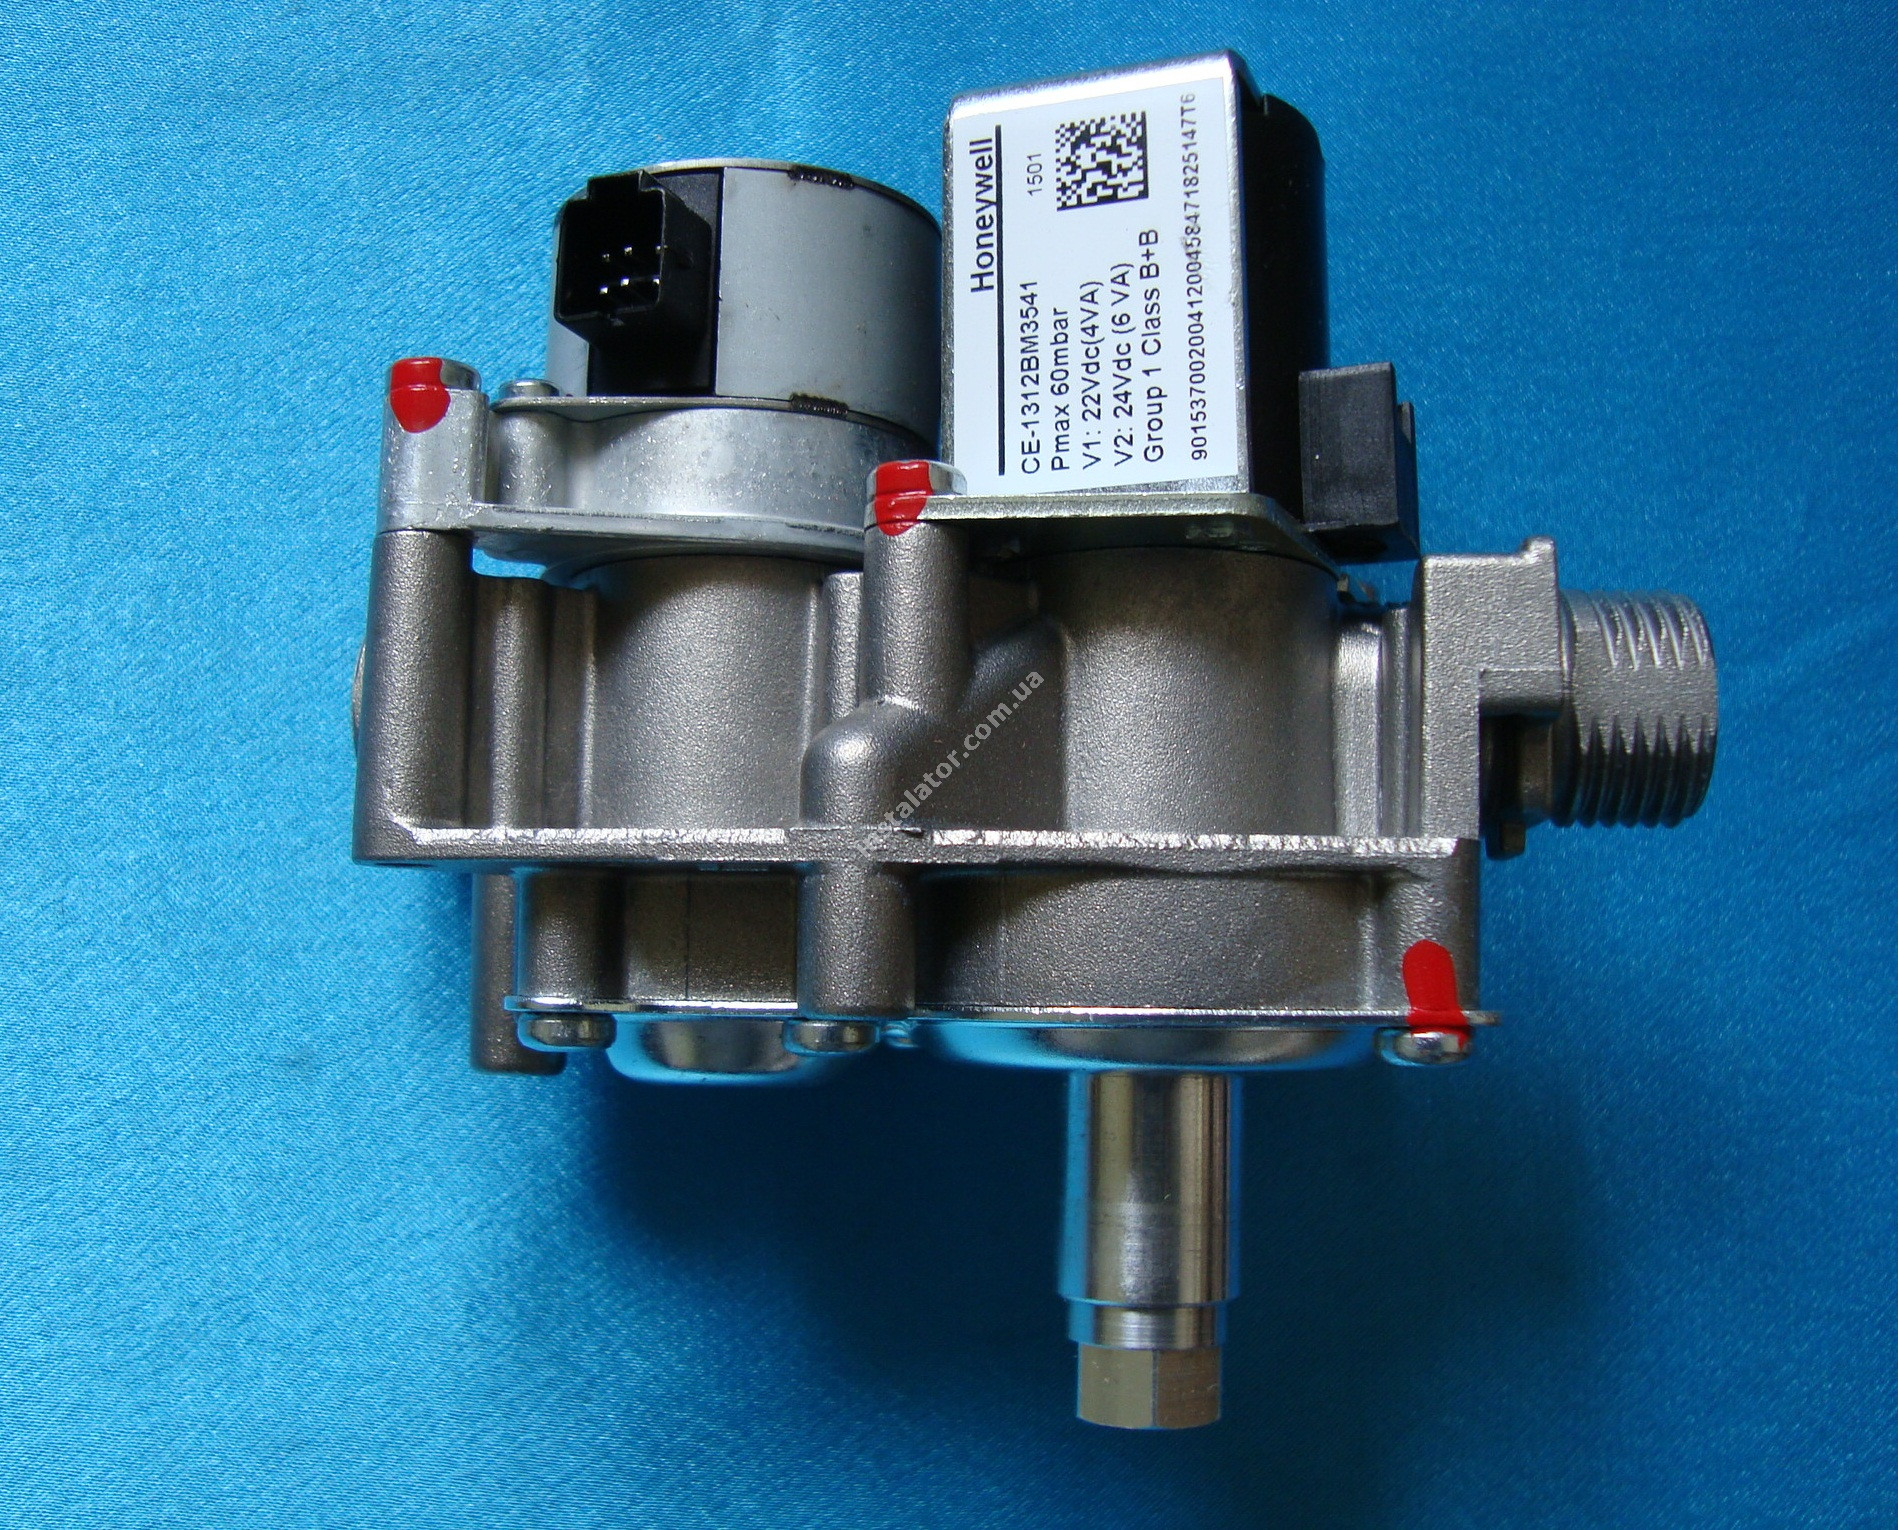 S1071600 (VK8515MR1501) Газовий клапан з регулятором Saunier Duval/Protherm